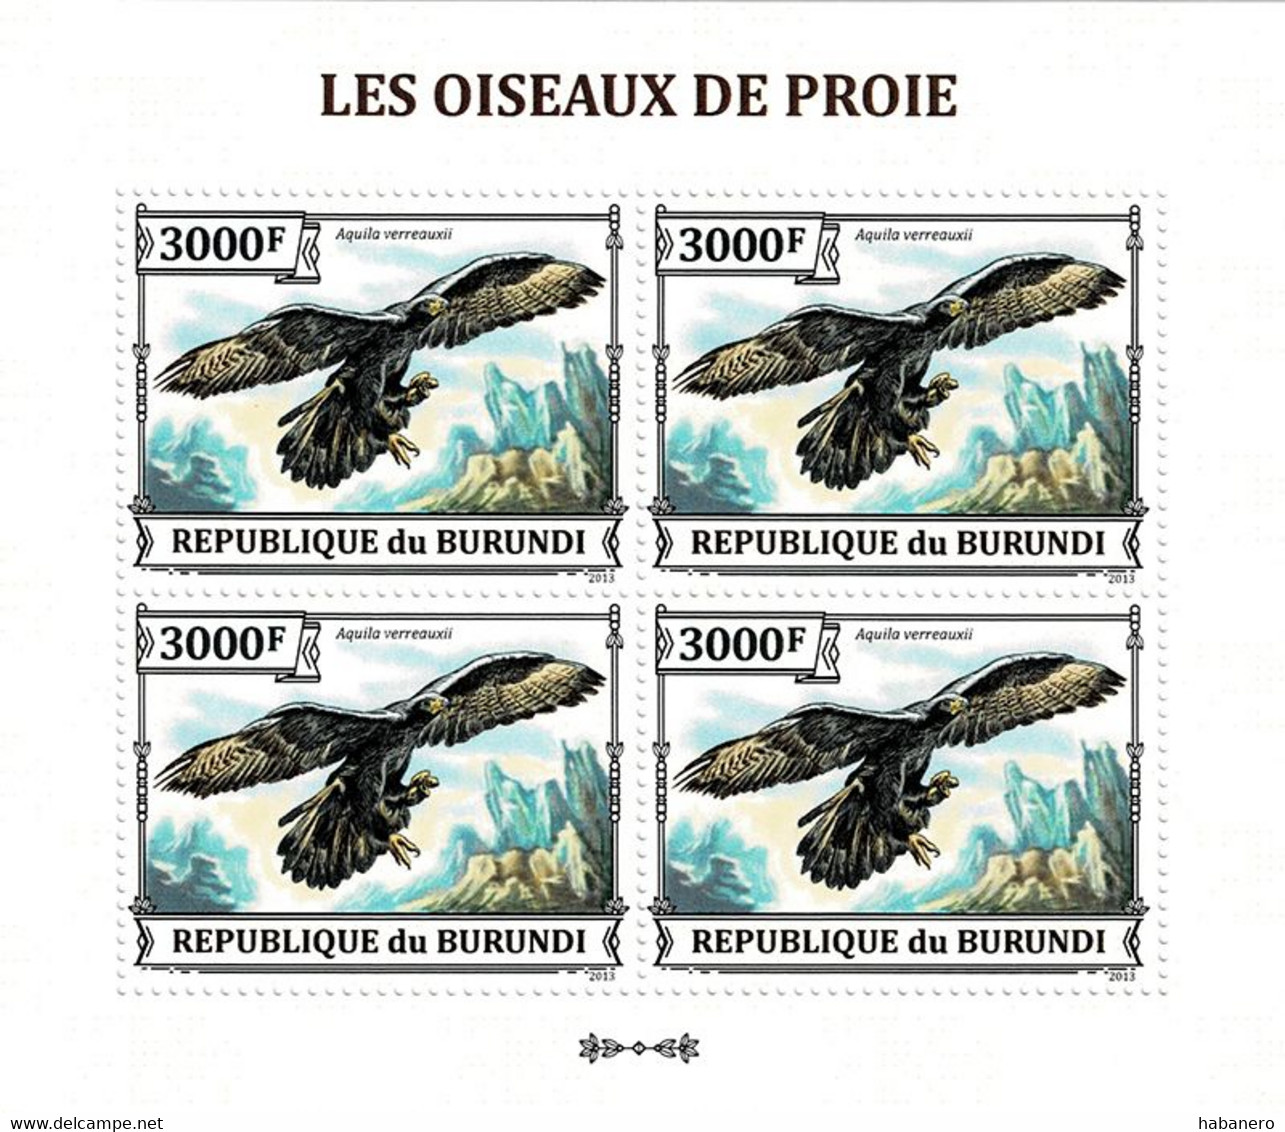 BURUNDI 2013 Mi 3245A KLB BIRDS OF PREY VERREAUX'S EAGLE MINT MINIATURE SHEET ** - Blocs-feuillets